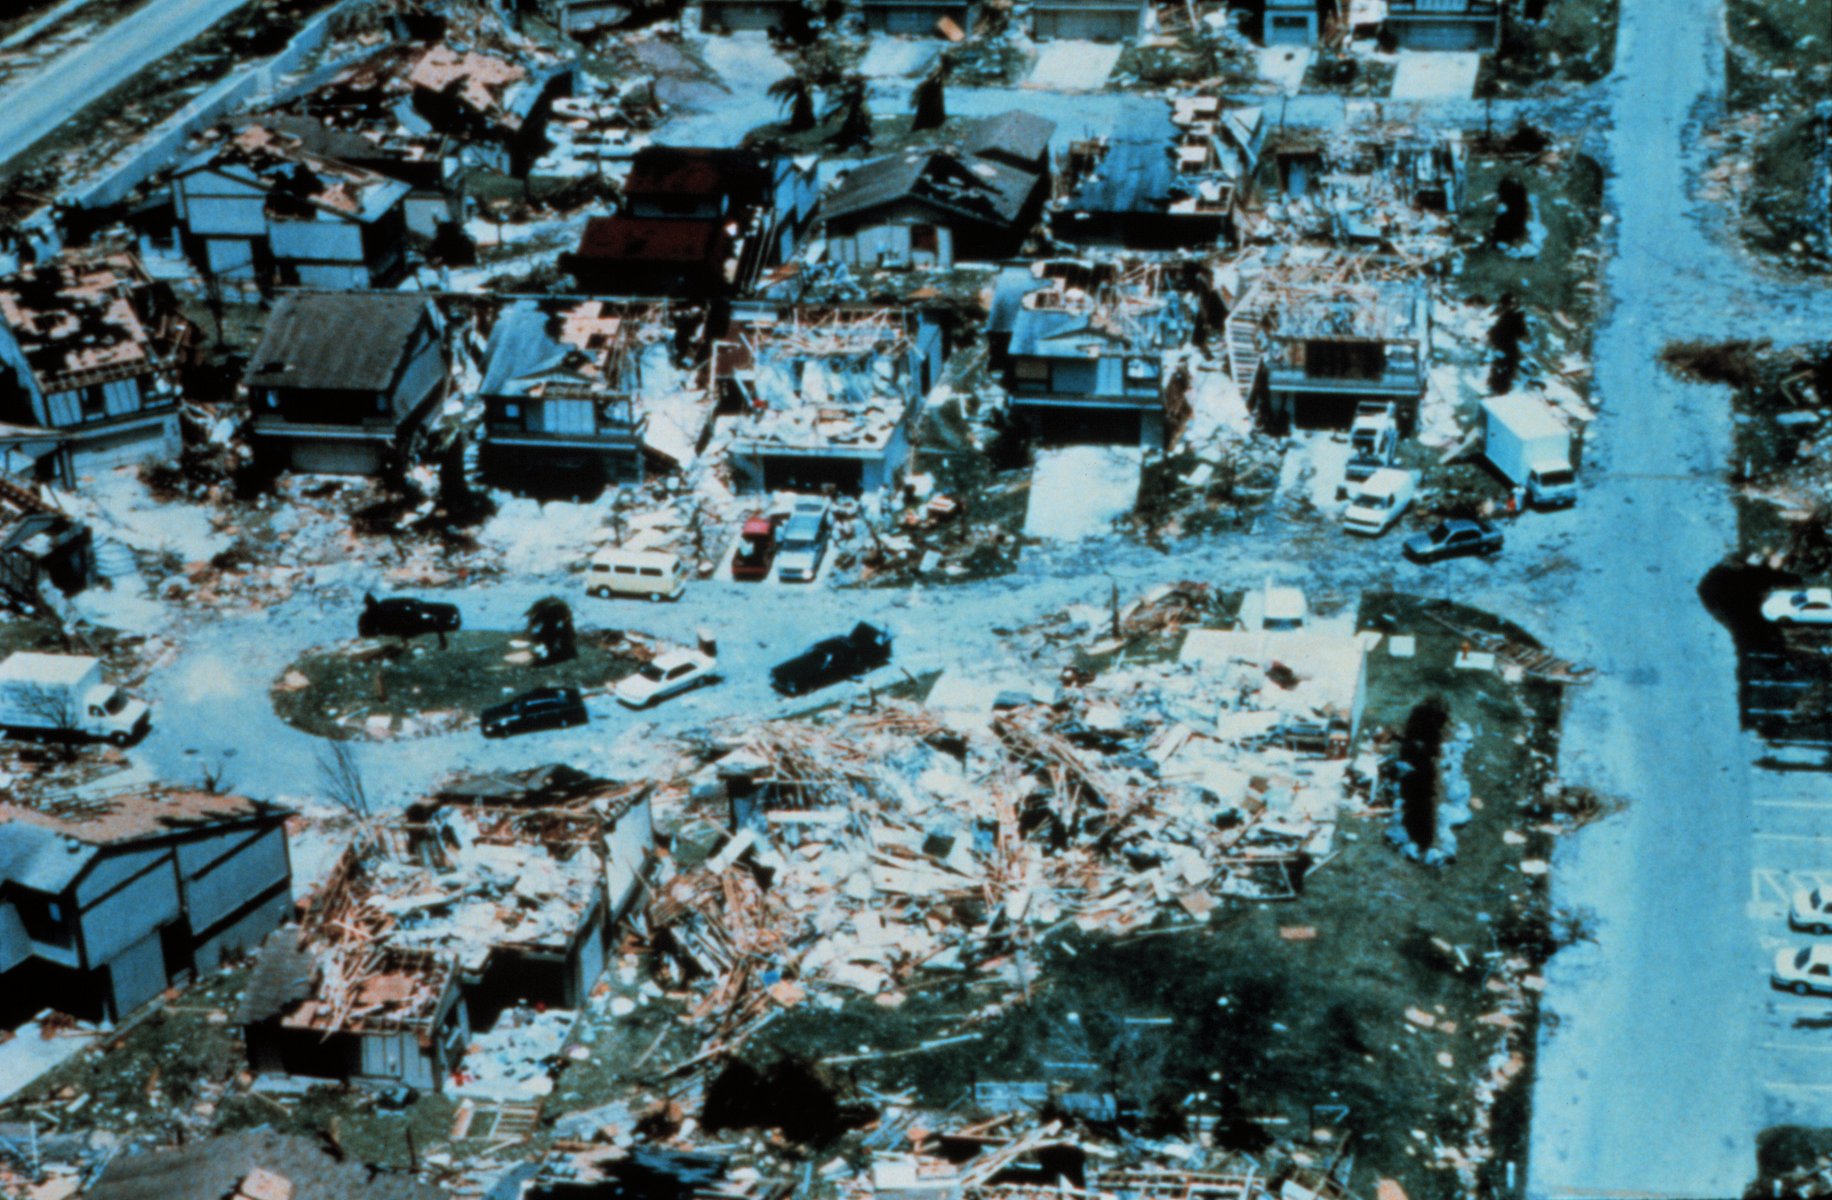 Destruction following Hurricane Andrews in 1992